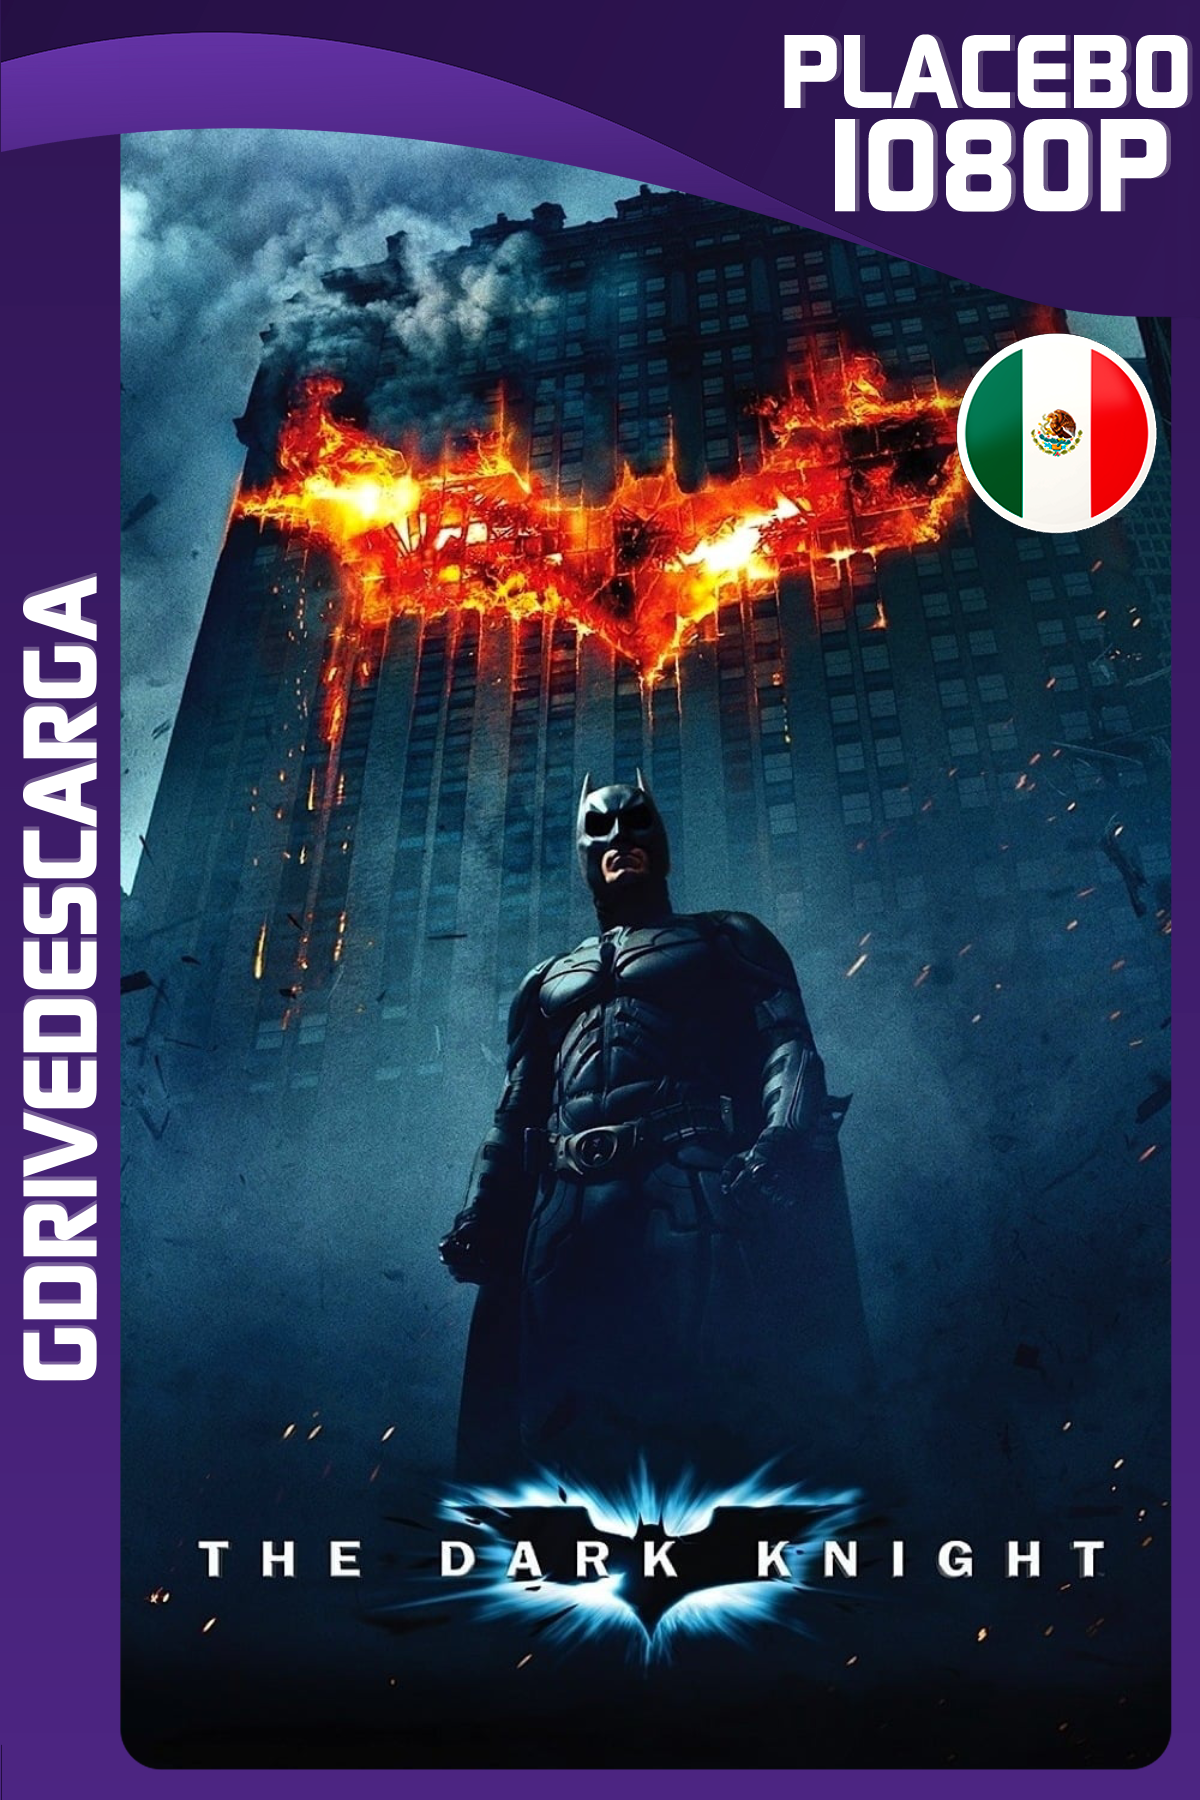 Batman: El Caballero De La Noche (2008) IMAX PLACEBO 1080p Latino-Ingles MKV